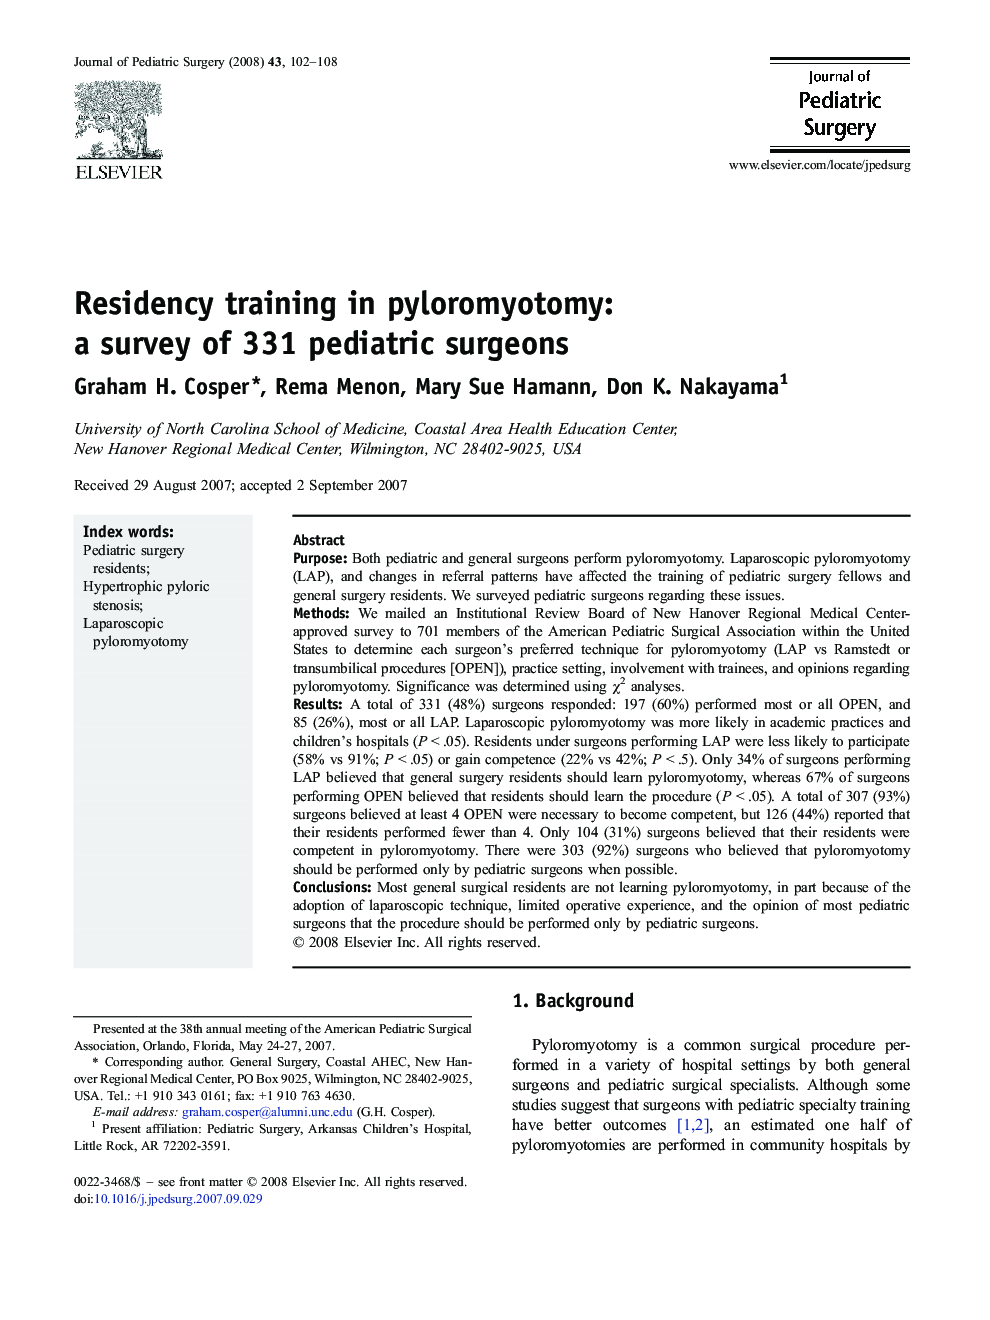 Residency training in pyloromyotomy: a survey of 331 pediatric surgeons 